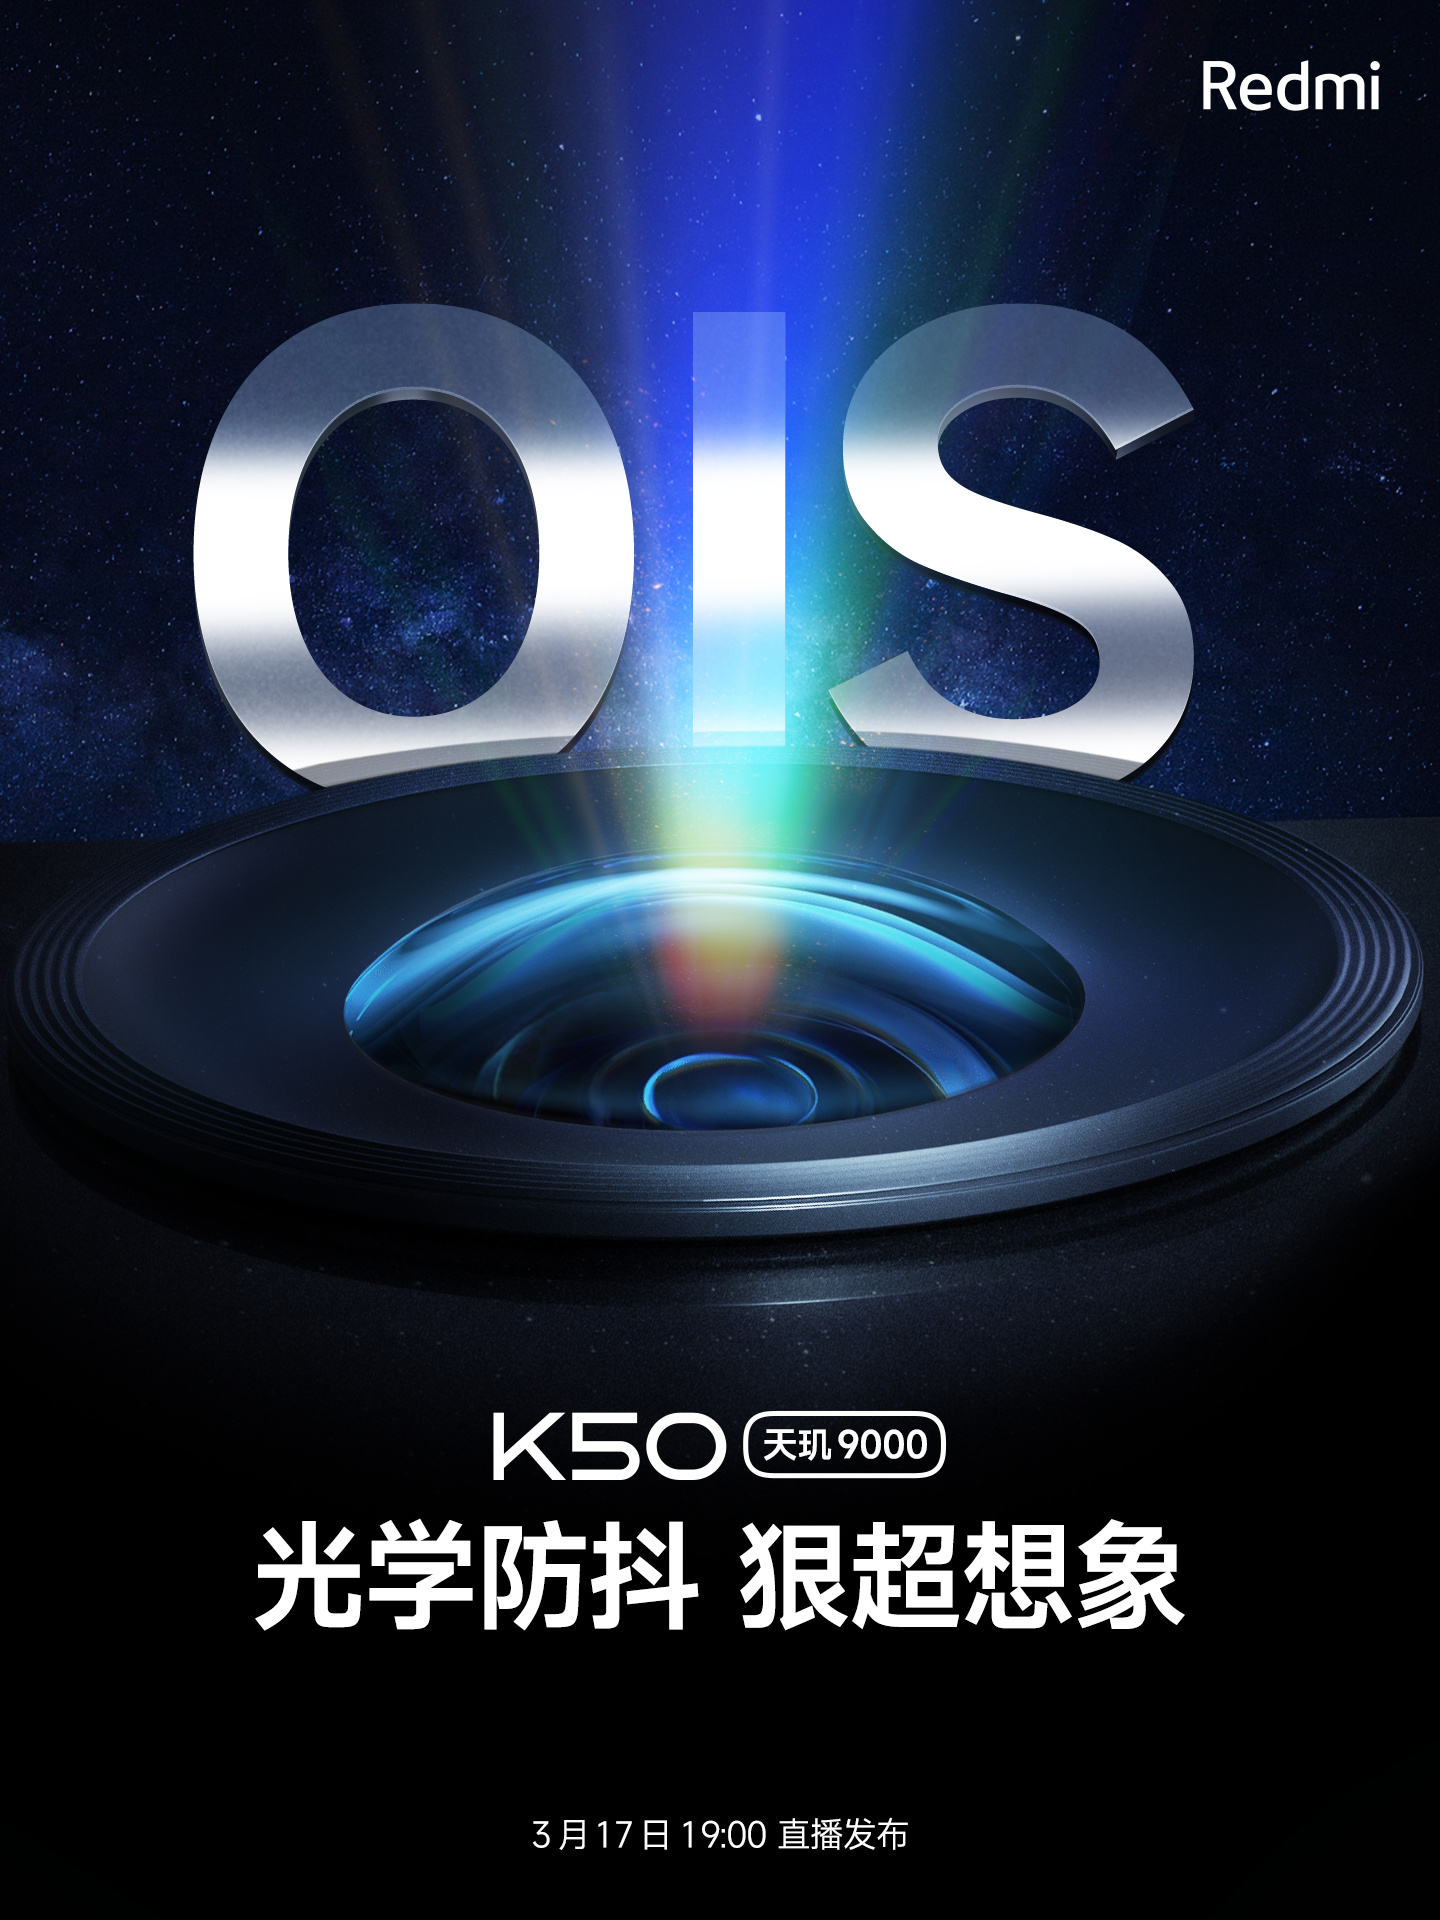 Redmi K50 Series Camera OIS Support